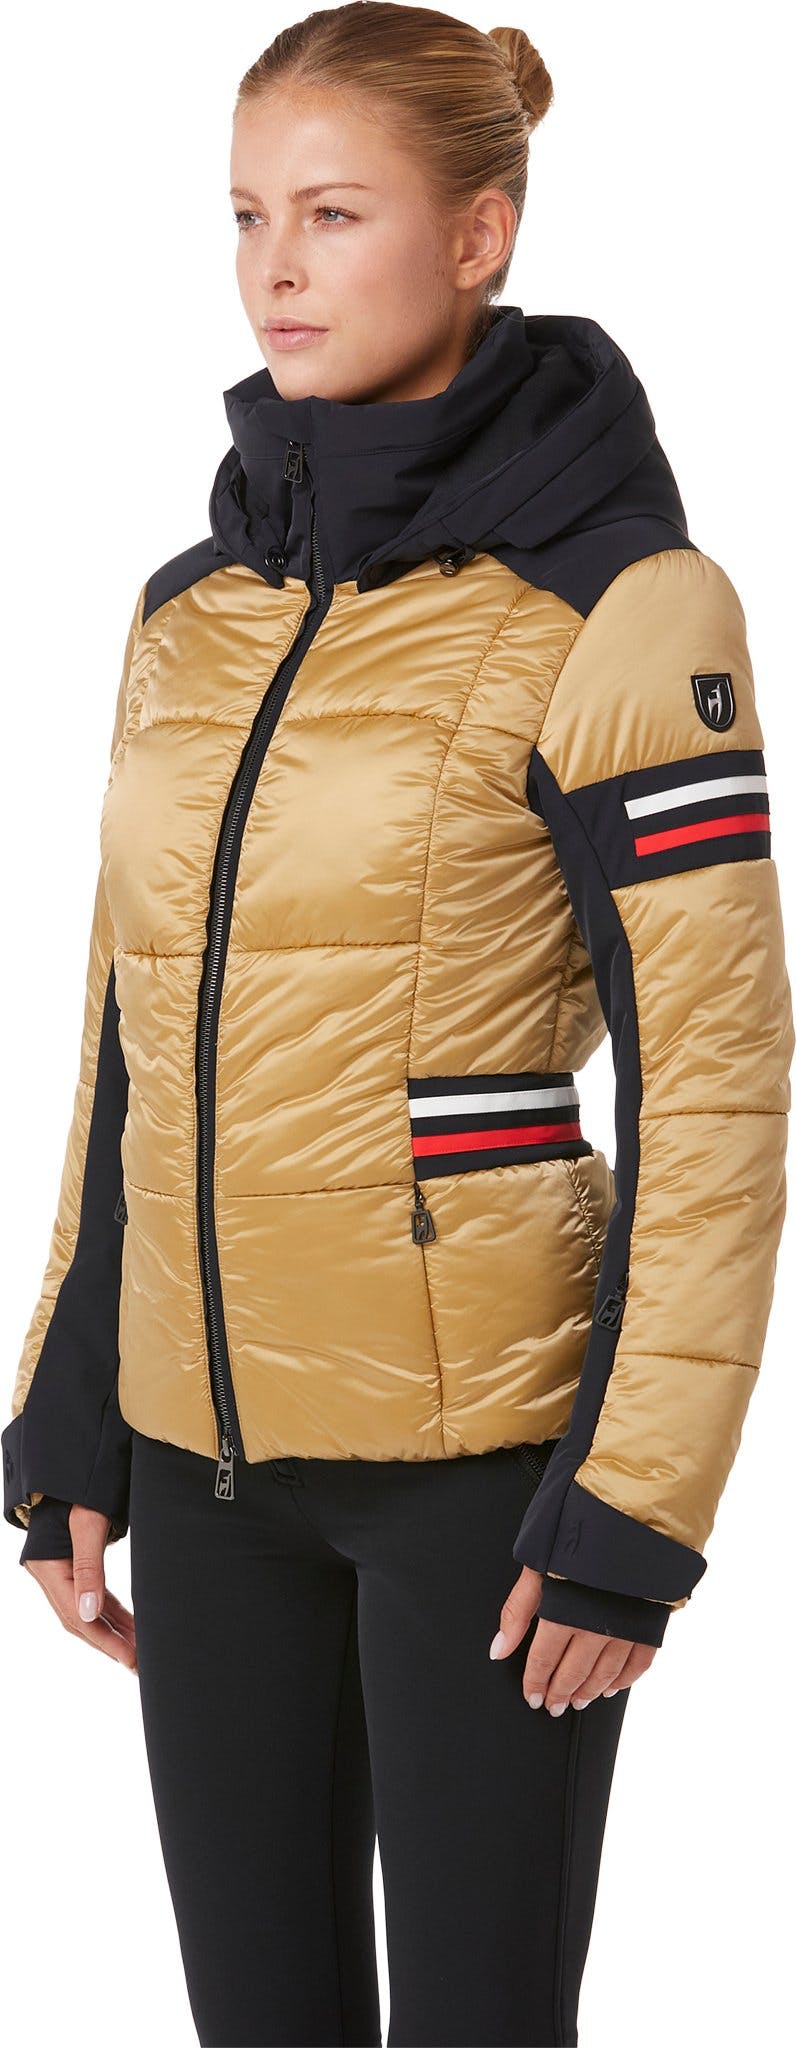 Product gallery image number 8 for product Nana Splendid Ski Jacket - Women's